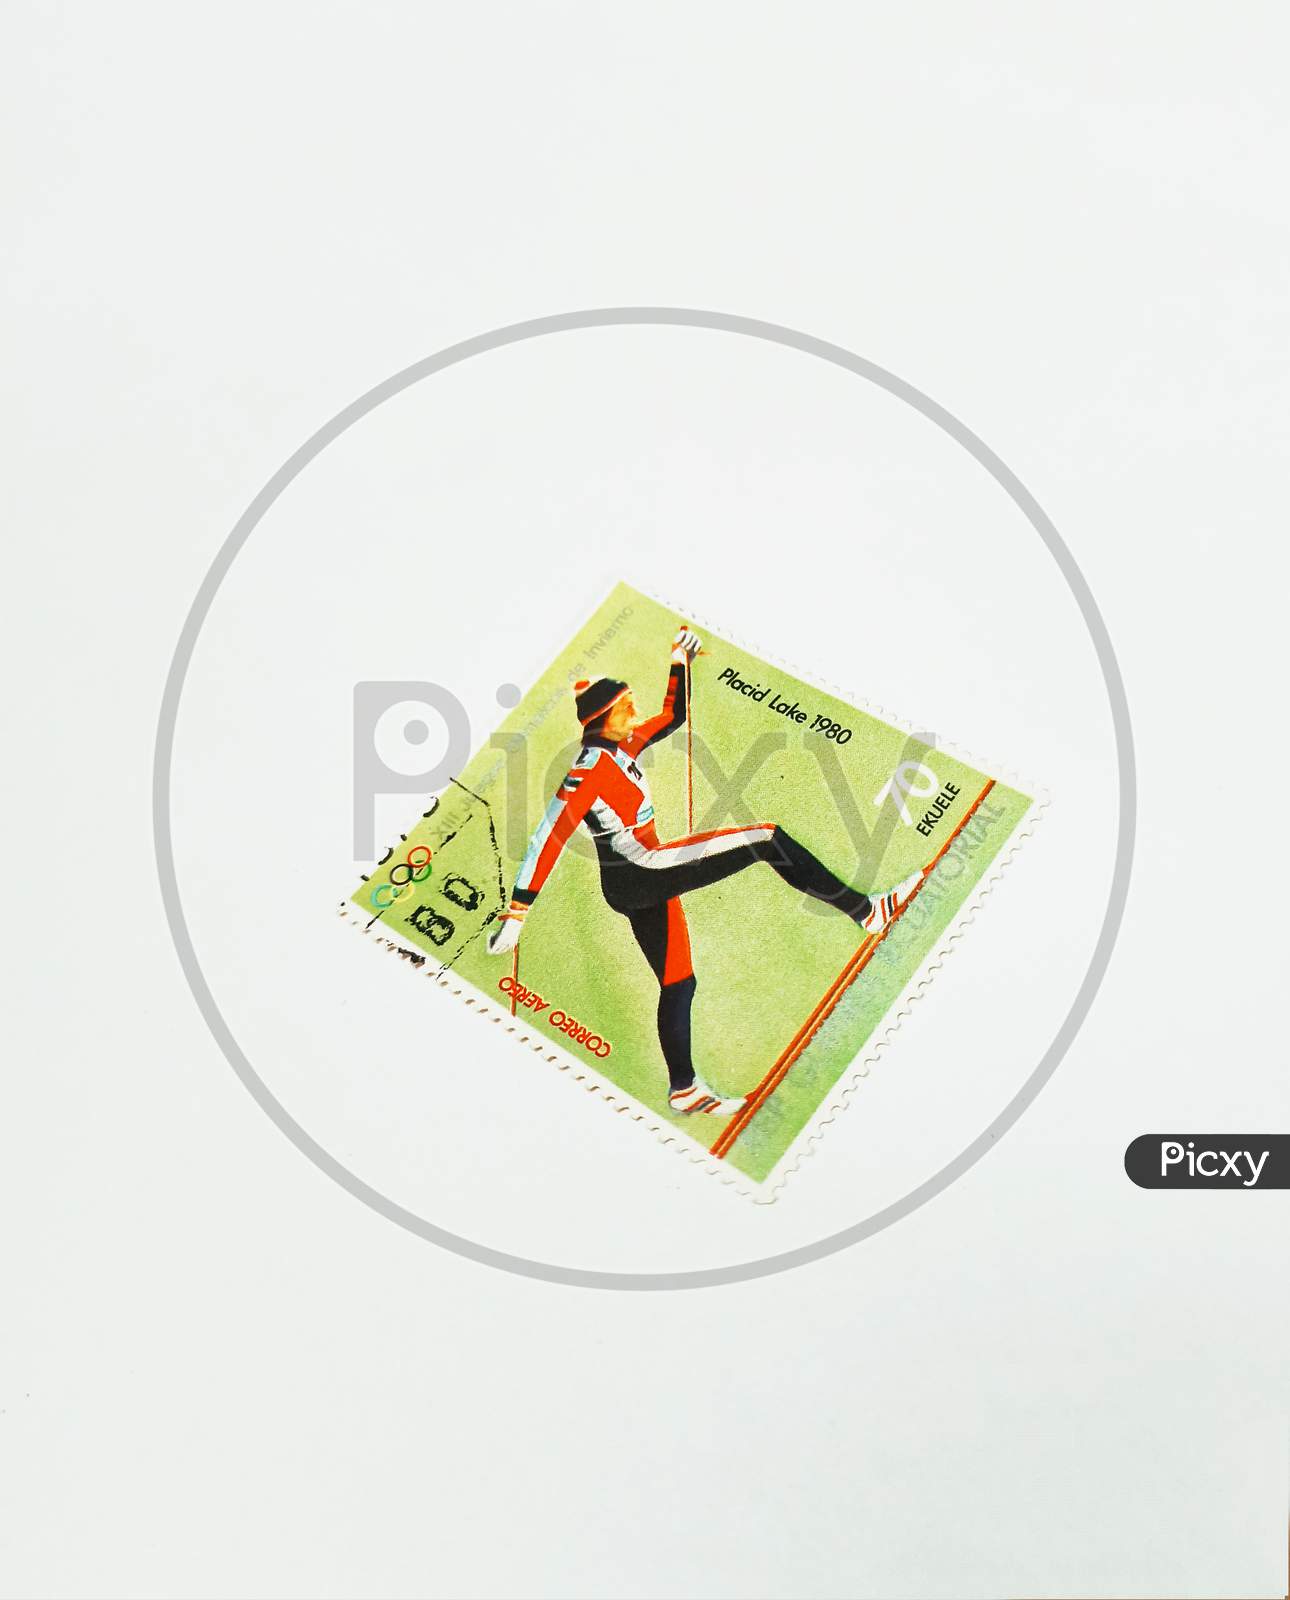 Guinea 1980 Olympics Postal stamp